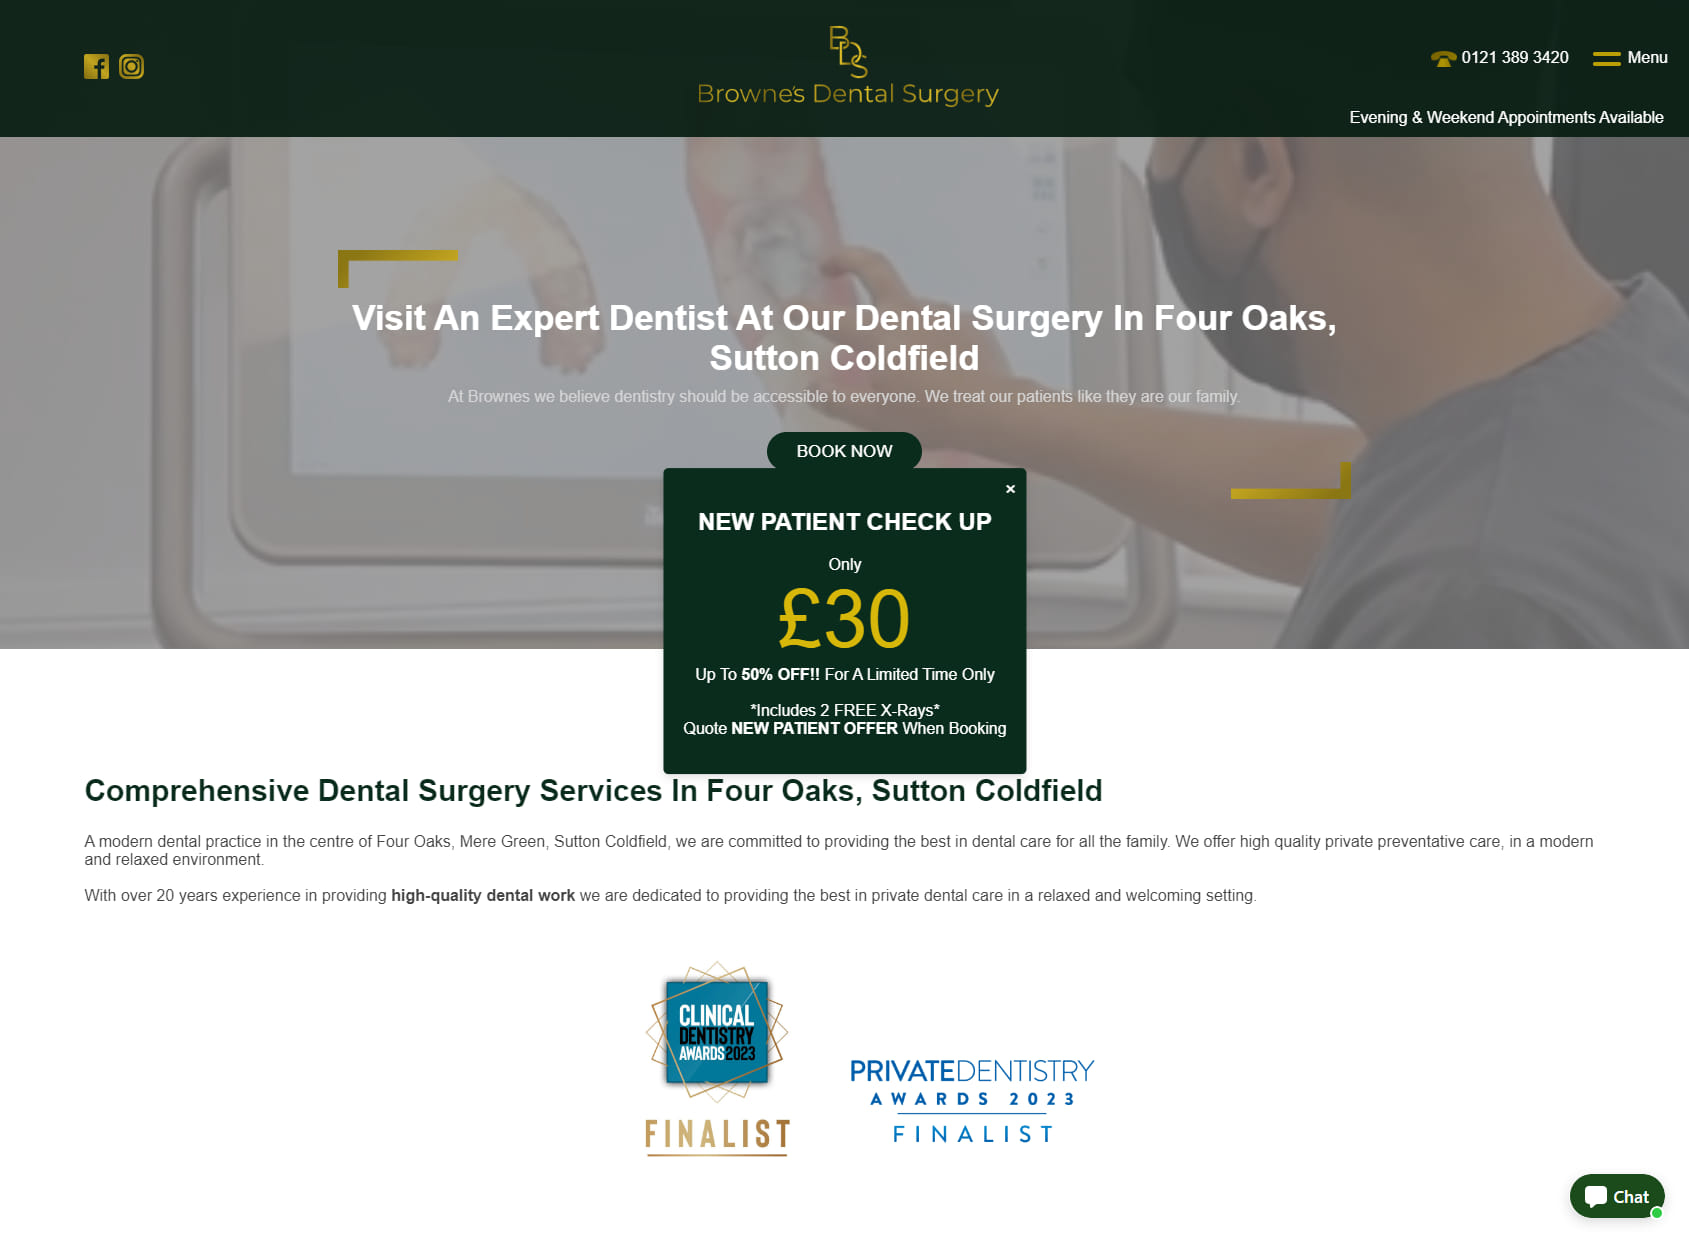 Browne's Dental Surgery